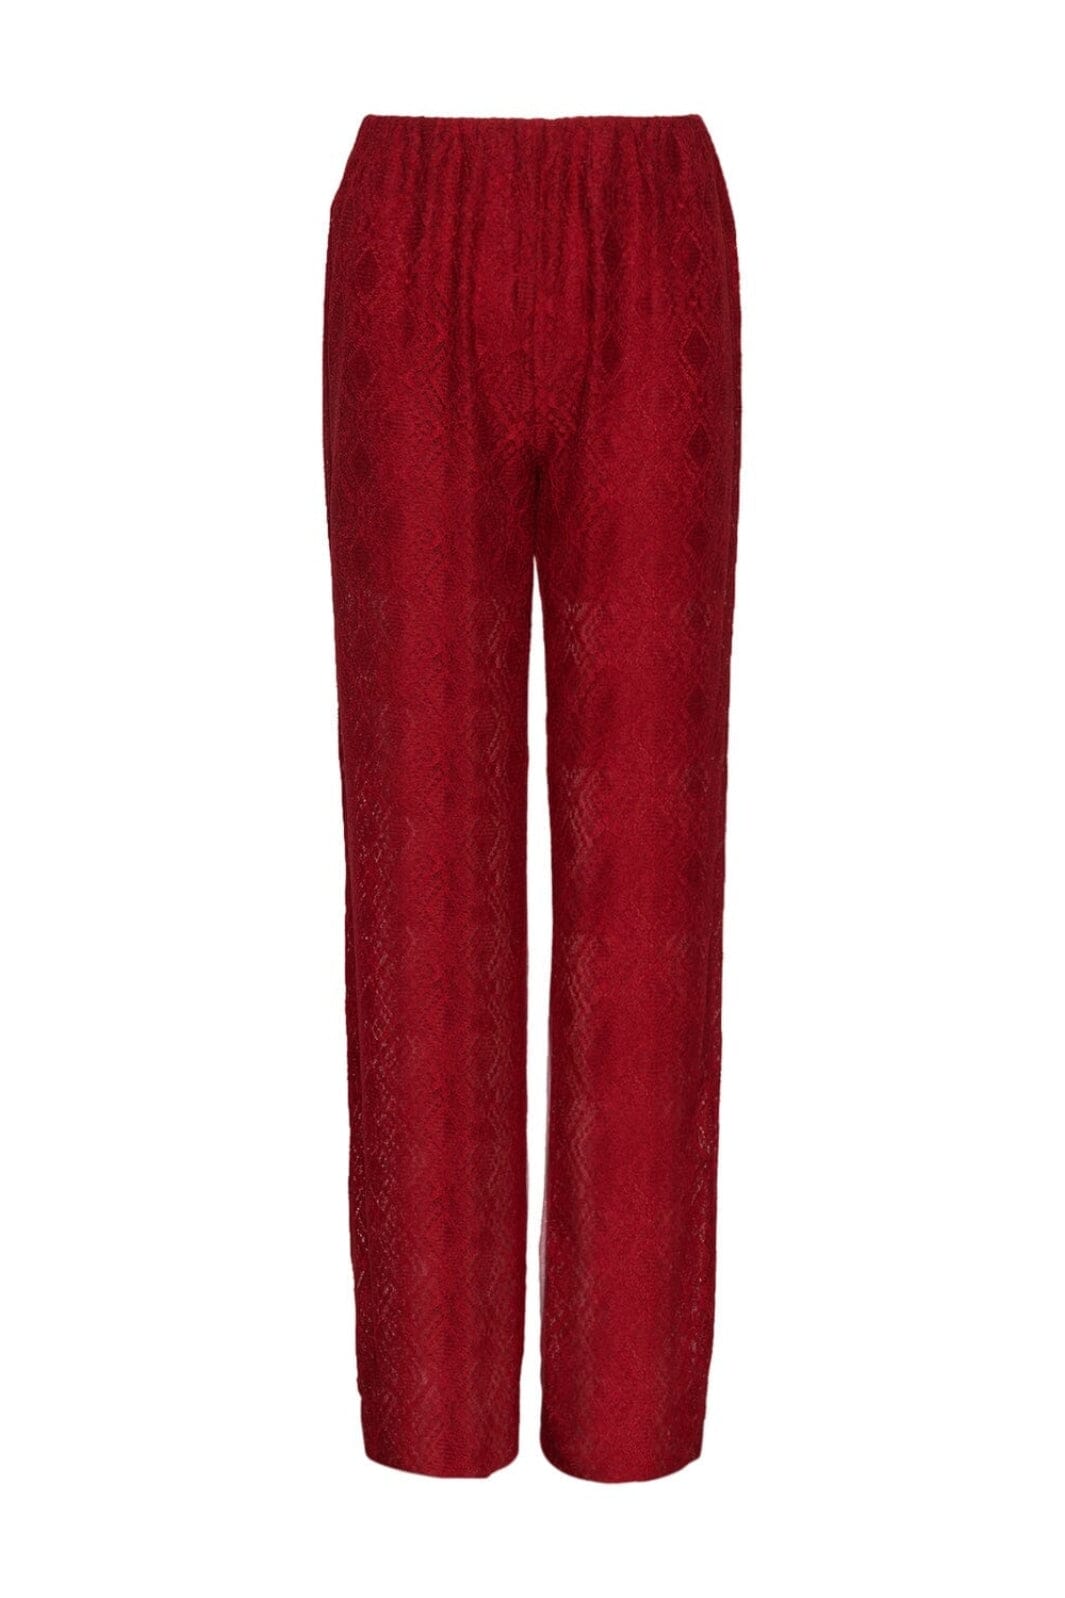 Noella - Texas Lace Pants - 014 Red Bukser 